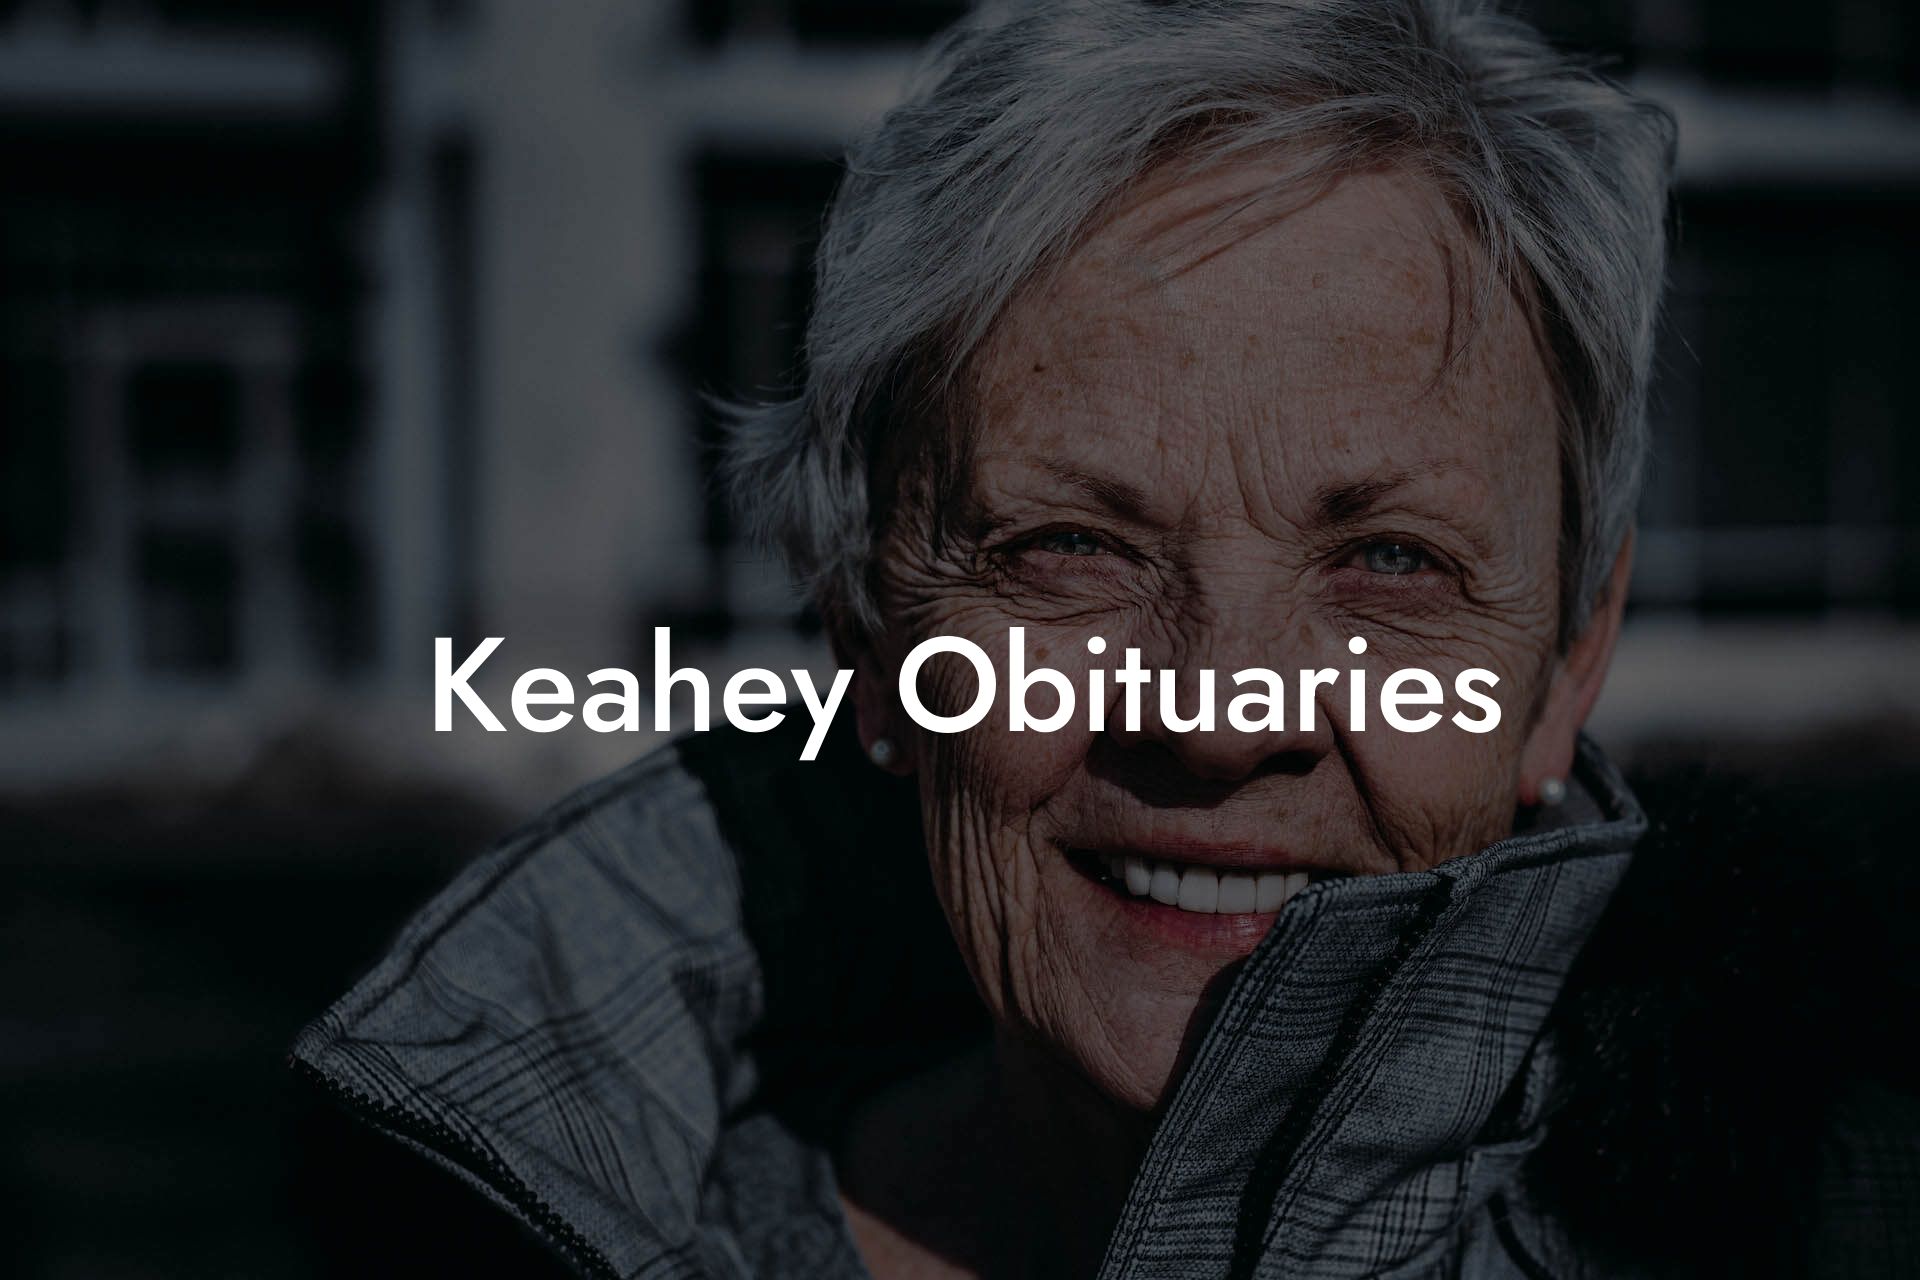 Keahey Obituaries